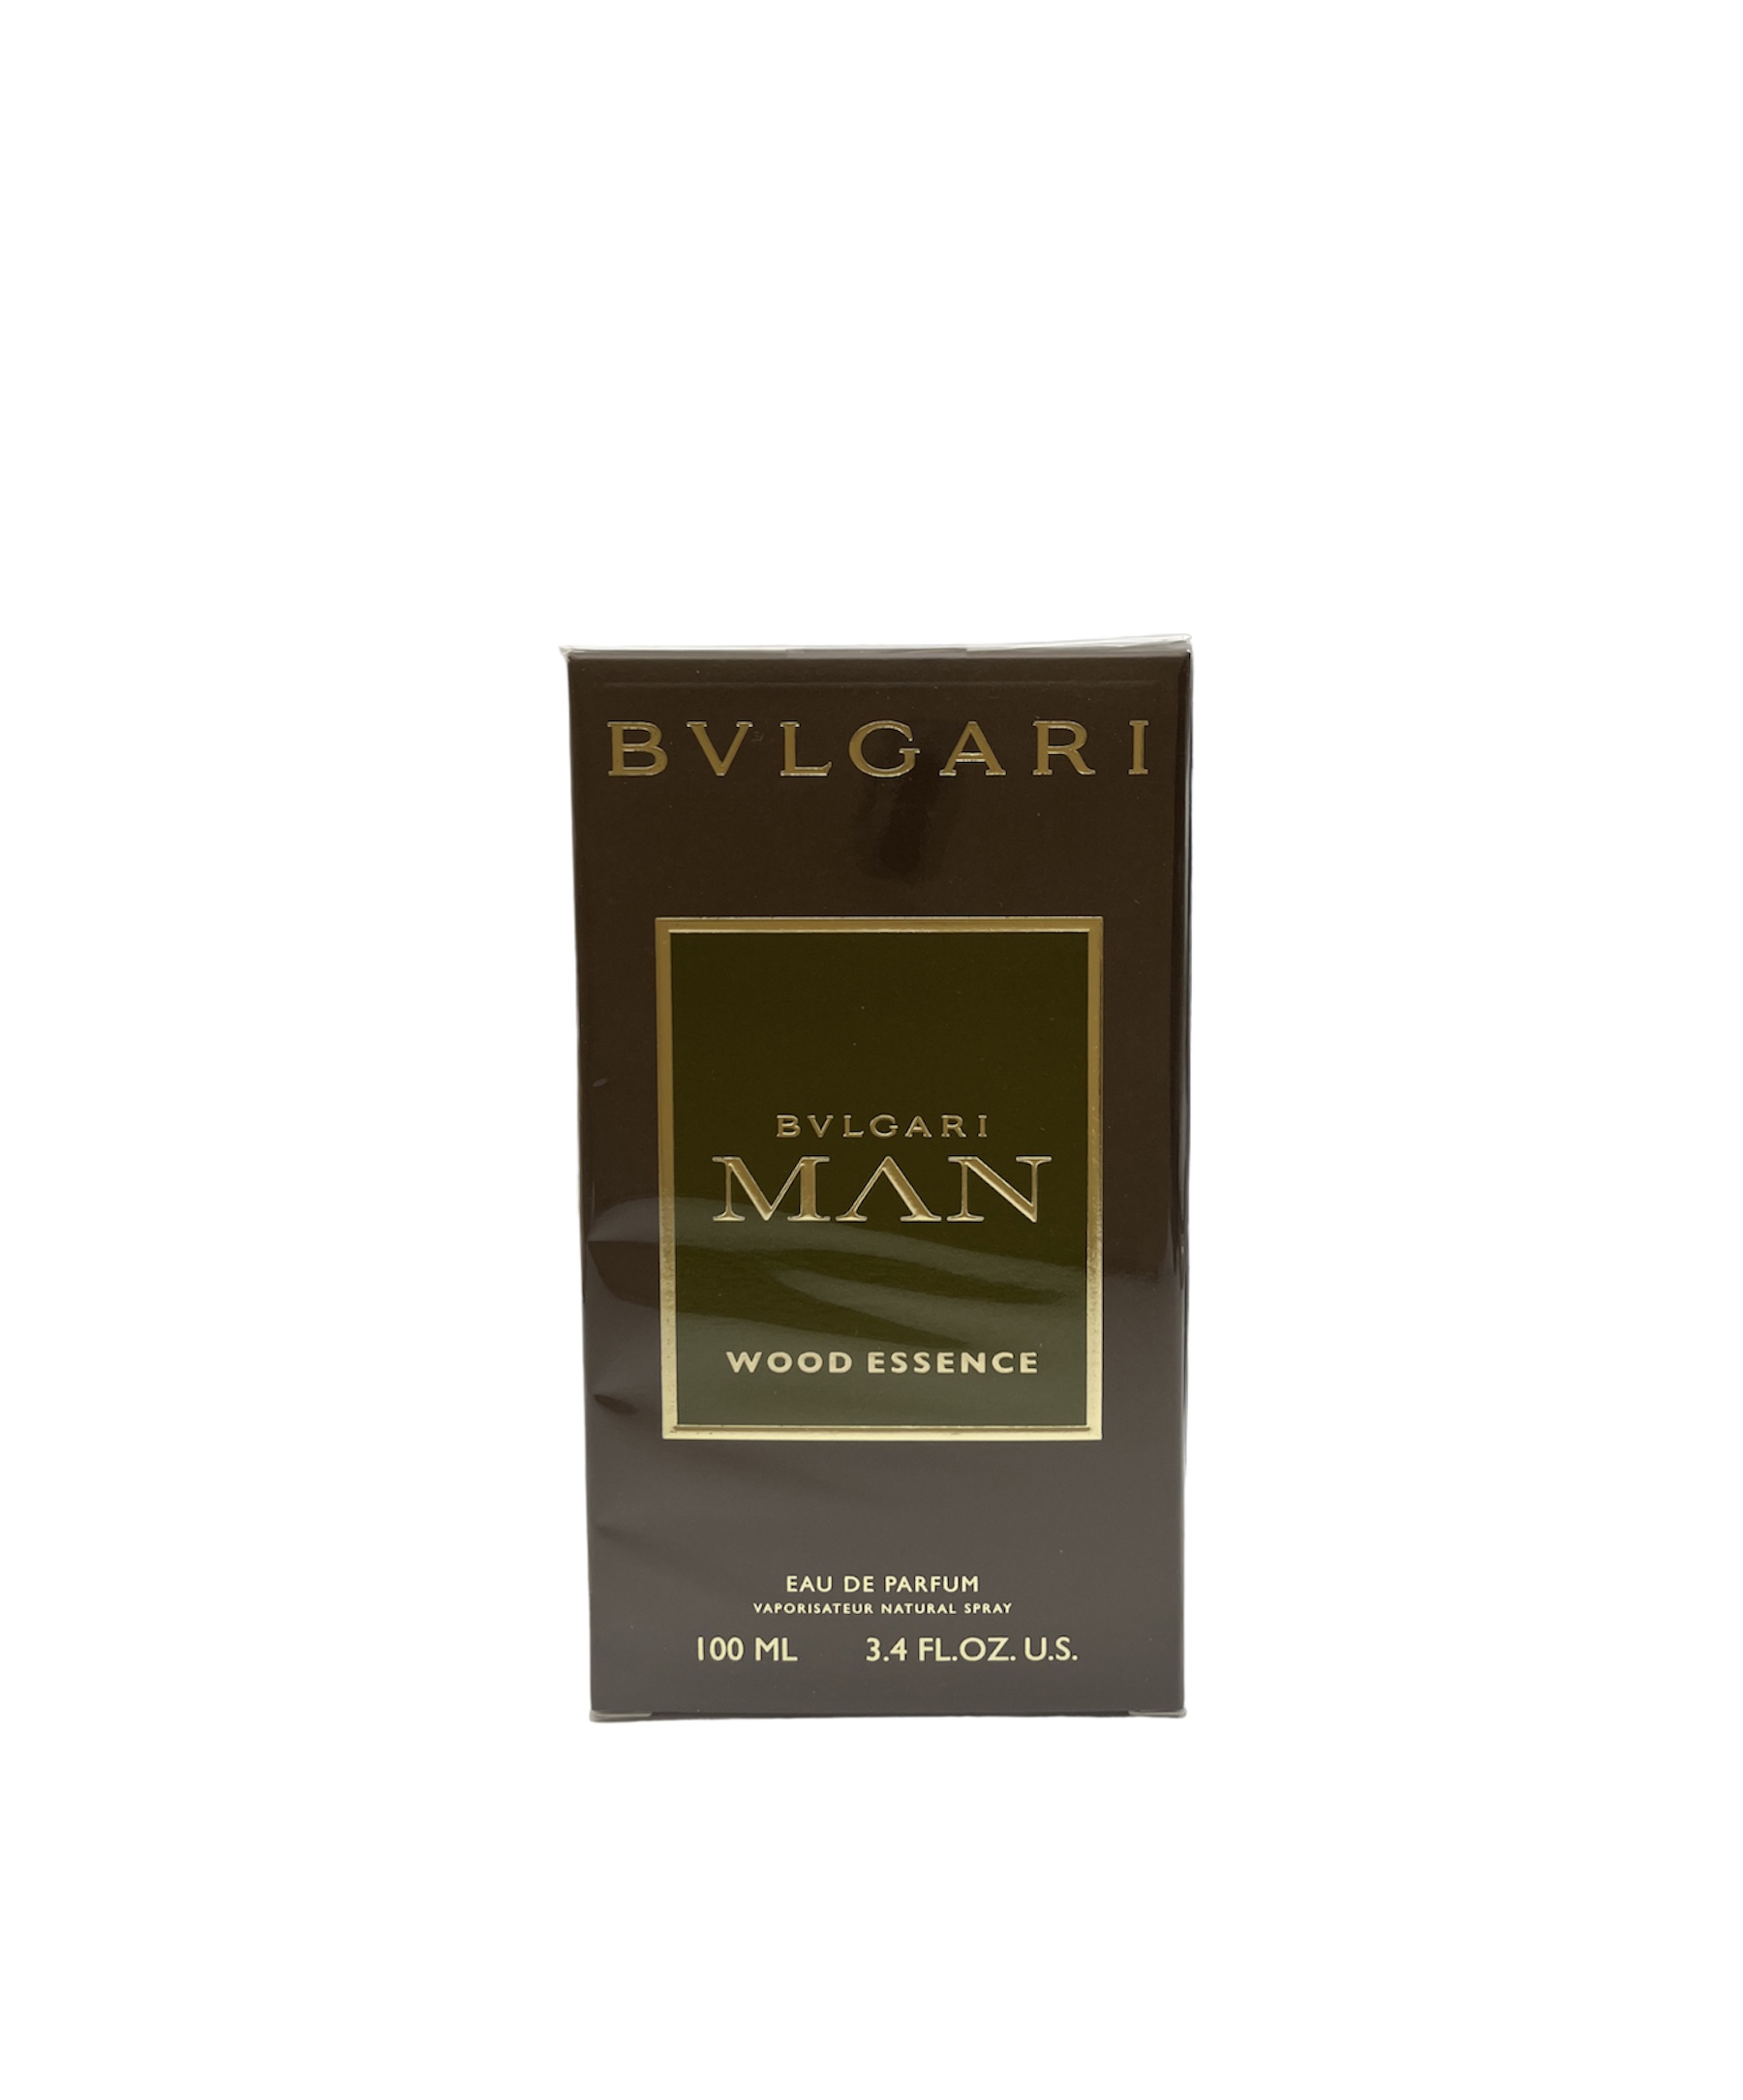  Bvgari Man Wood Essence Eau de Parfum 100ml 